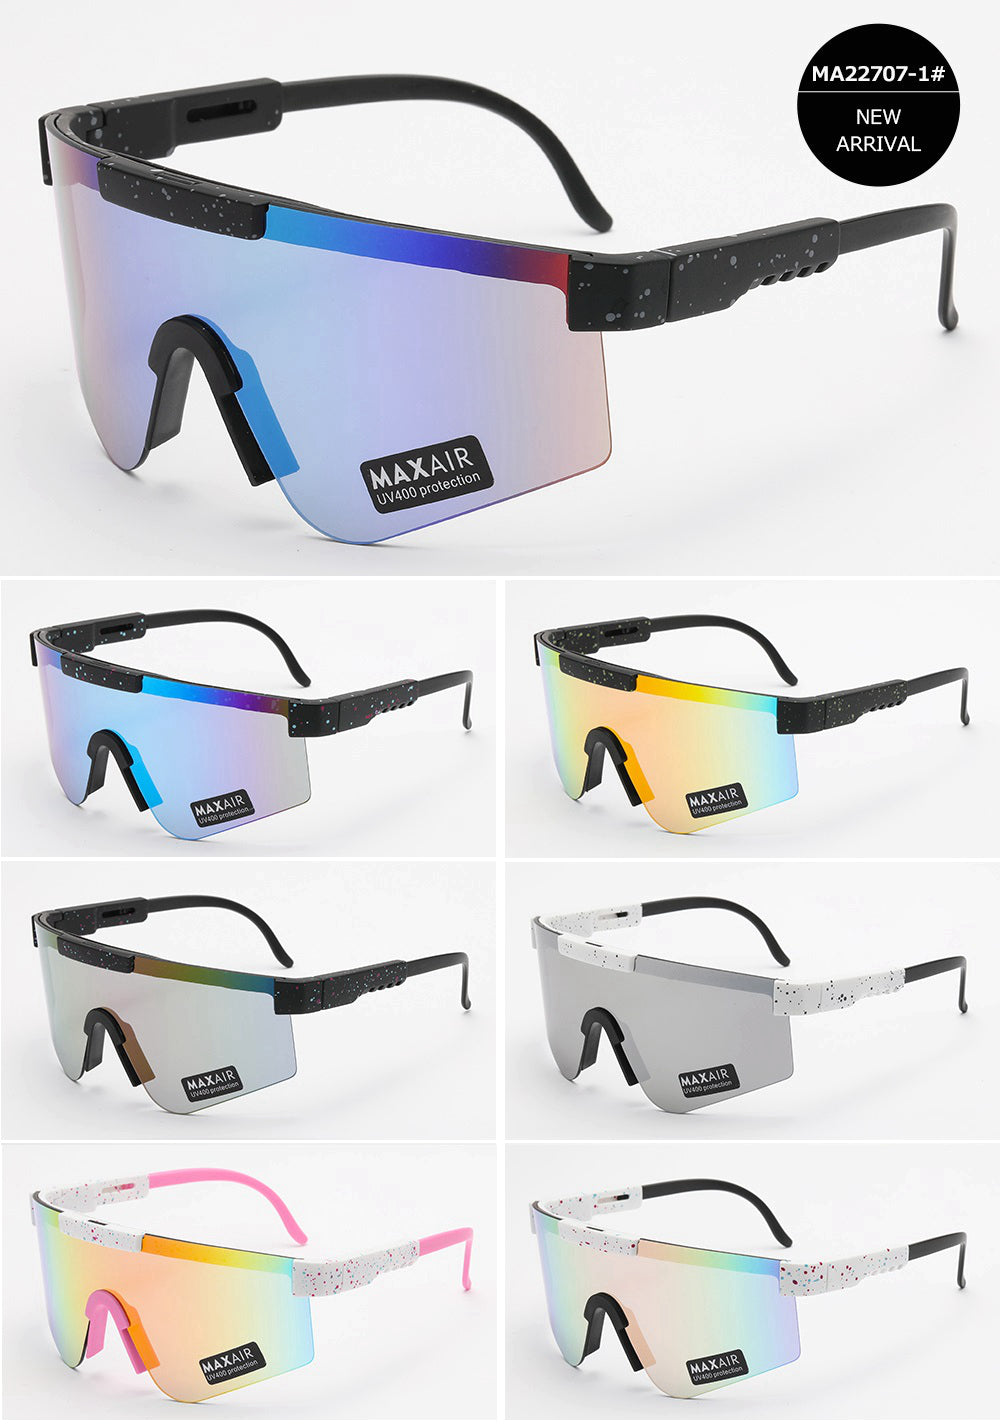 Maxair 22707-1 Sunglasses